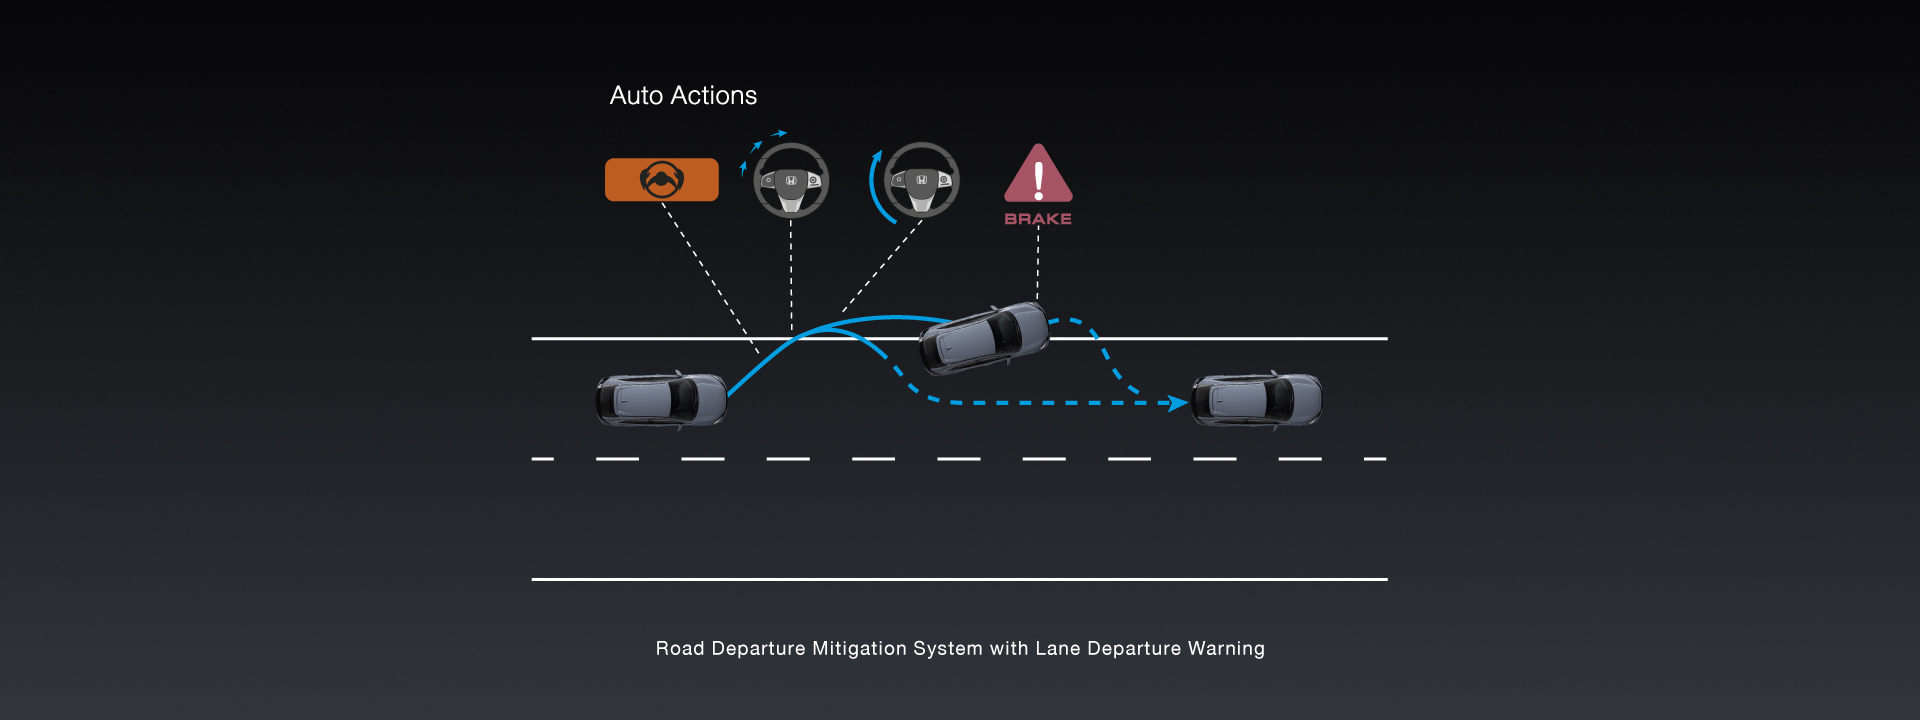 Road Departure Mitigation System with Lane Departure Warning (RDM with LDW) ระบบเตือนและช่วยควบคุมเมื่อรถออกนอกช่องทางเดินรถ